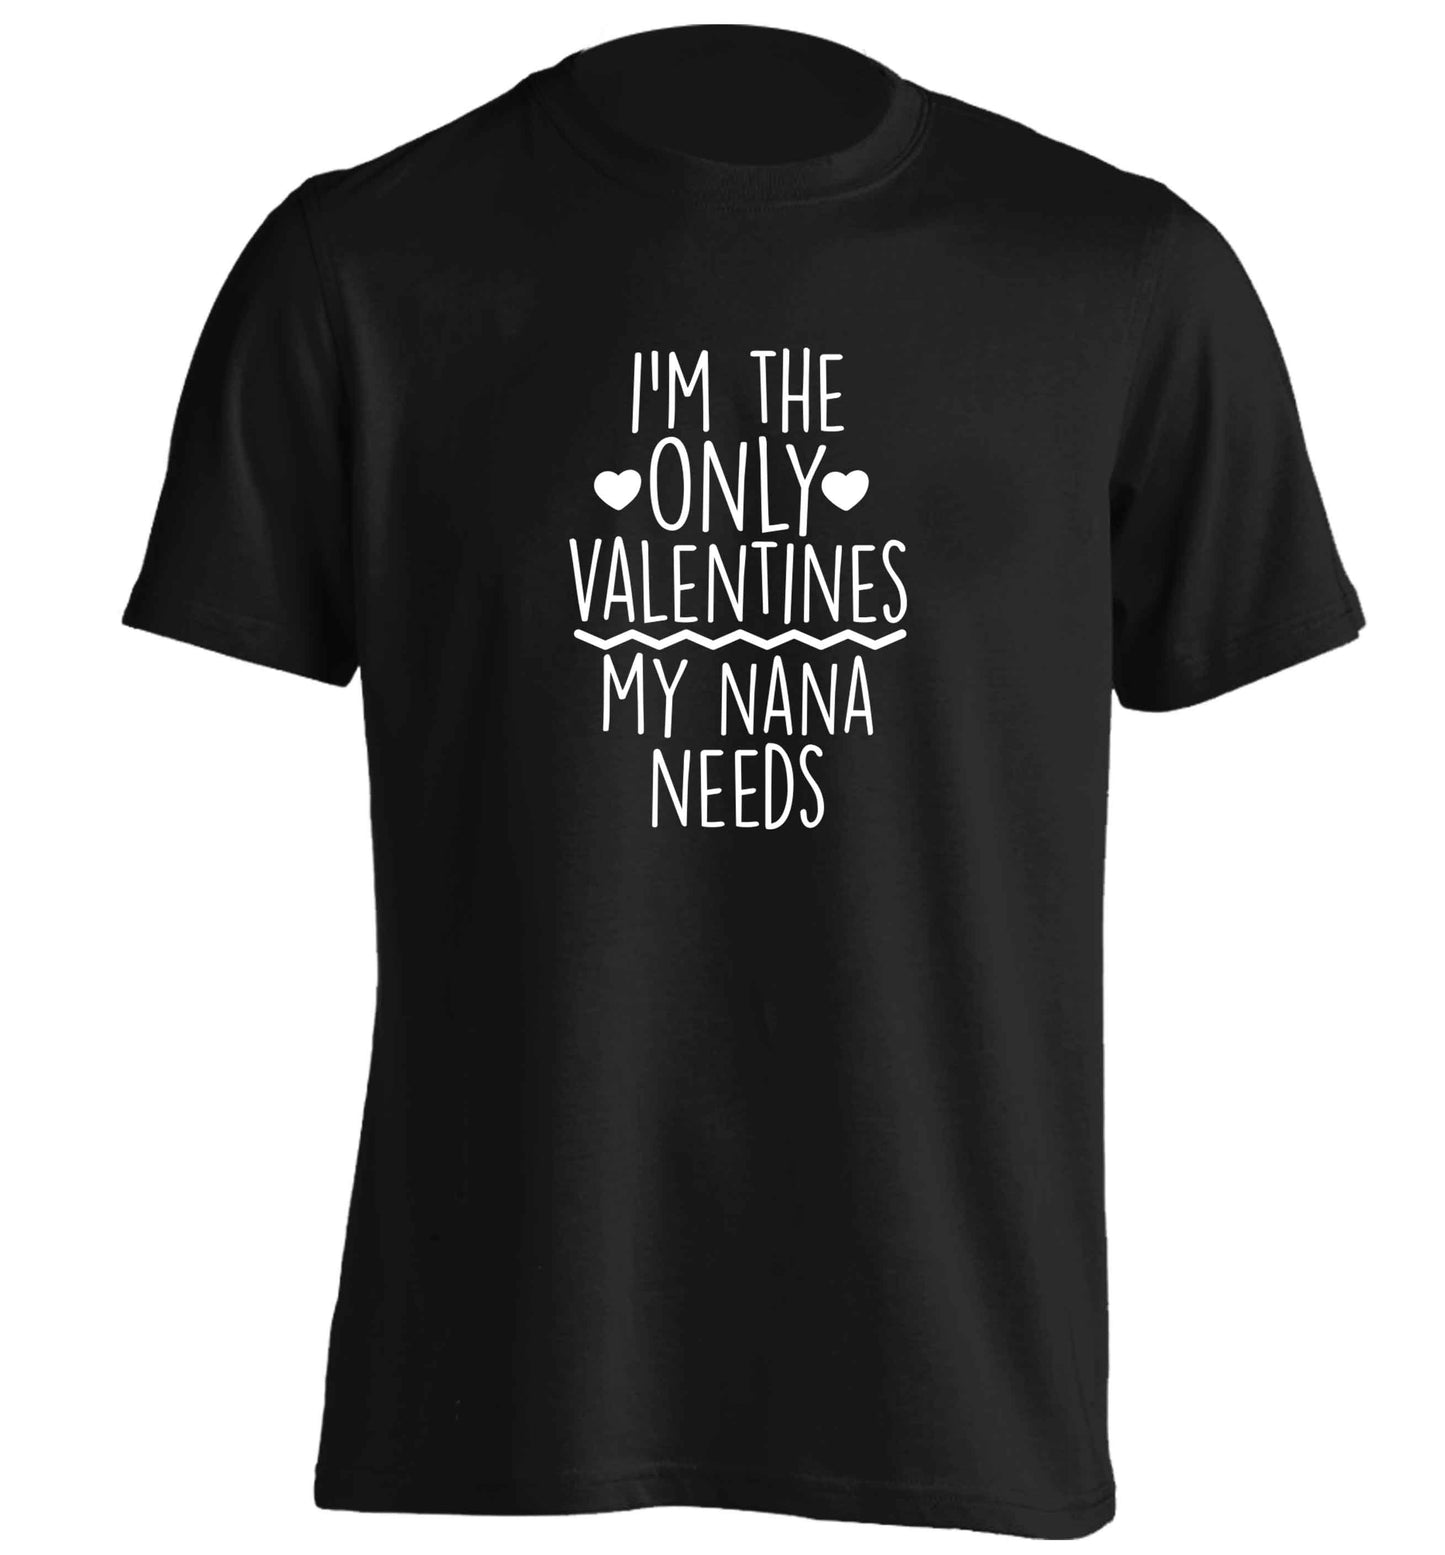 I'm the only valentines my nana needs adults unisex black Tshirt 2XL